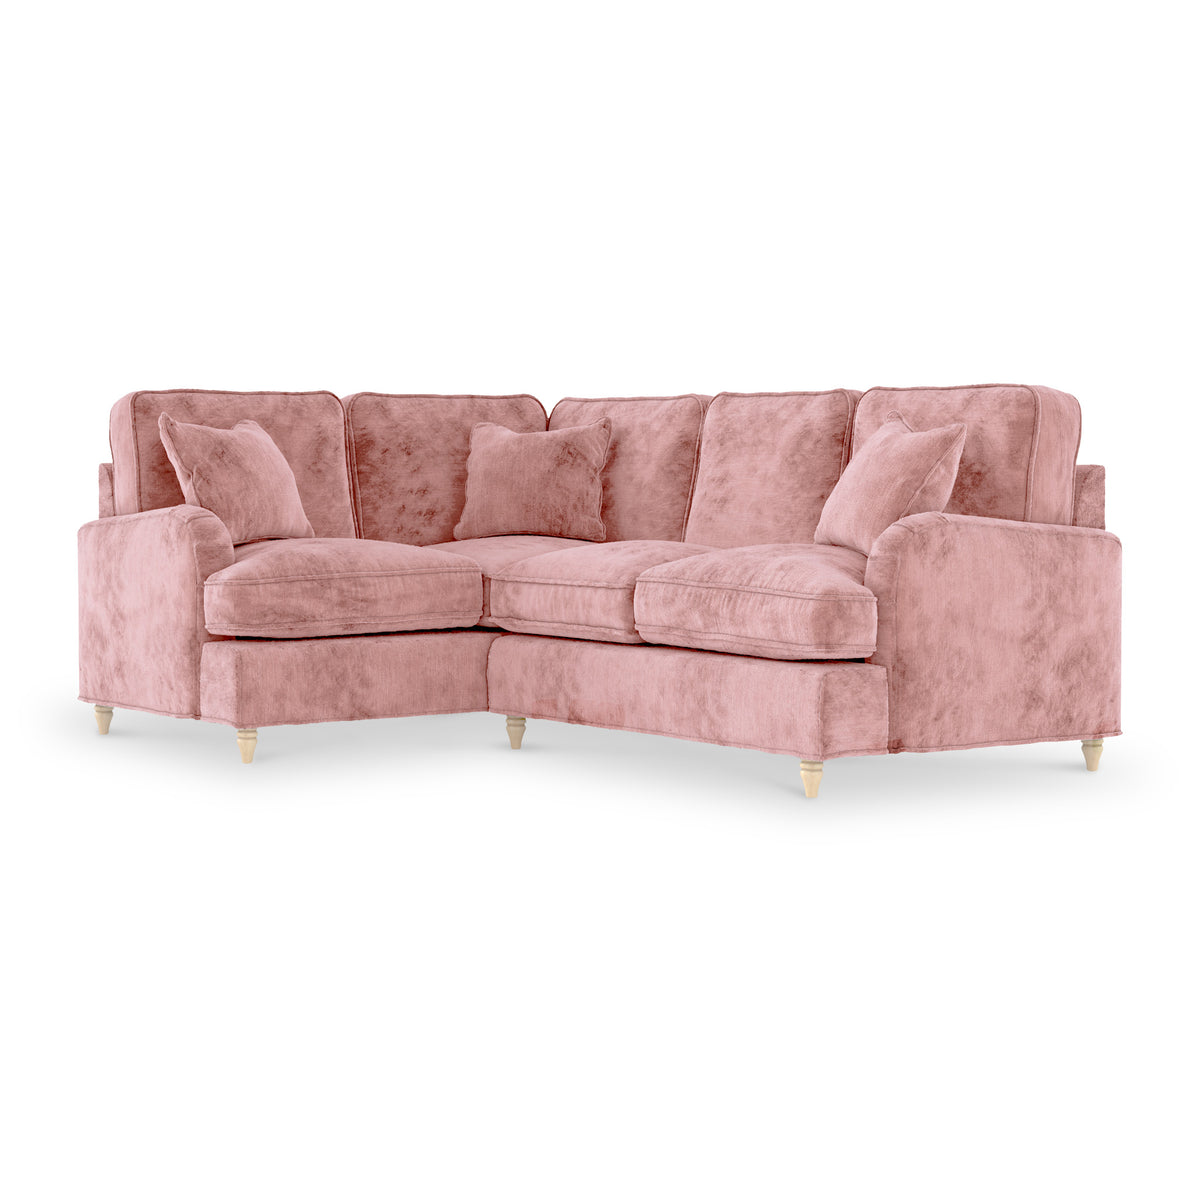 Arthur Plum Pink LH Corner Sofa from Roseland Furniture